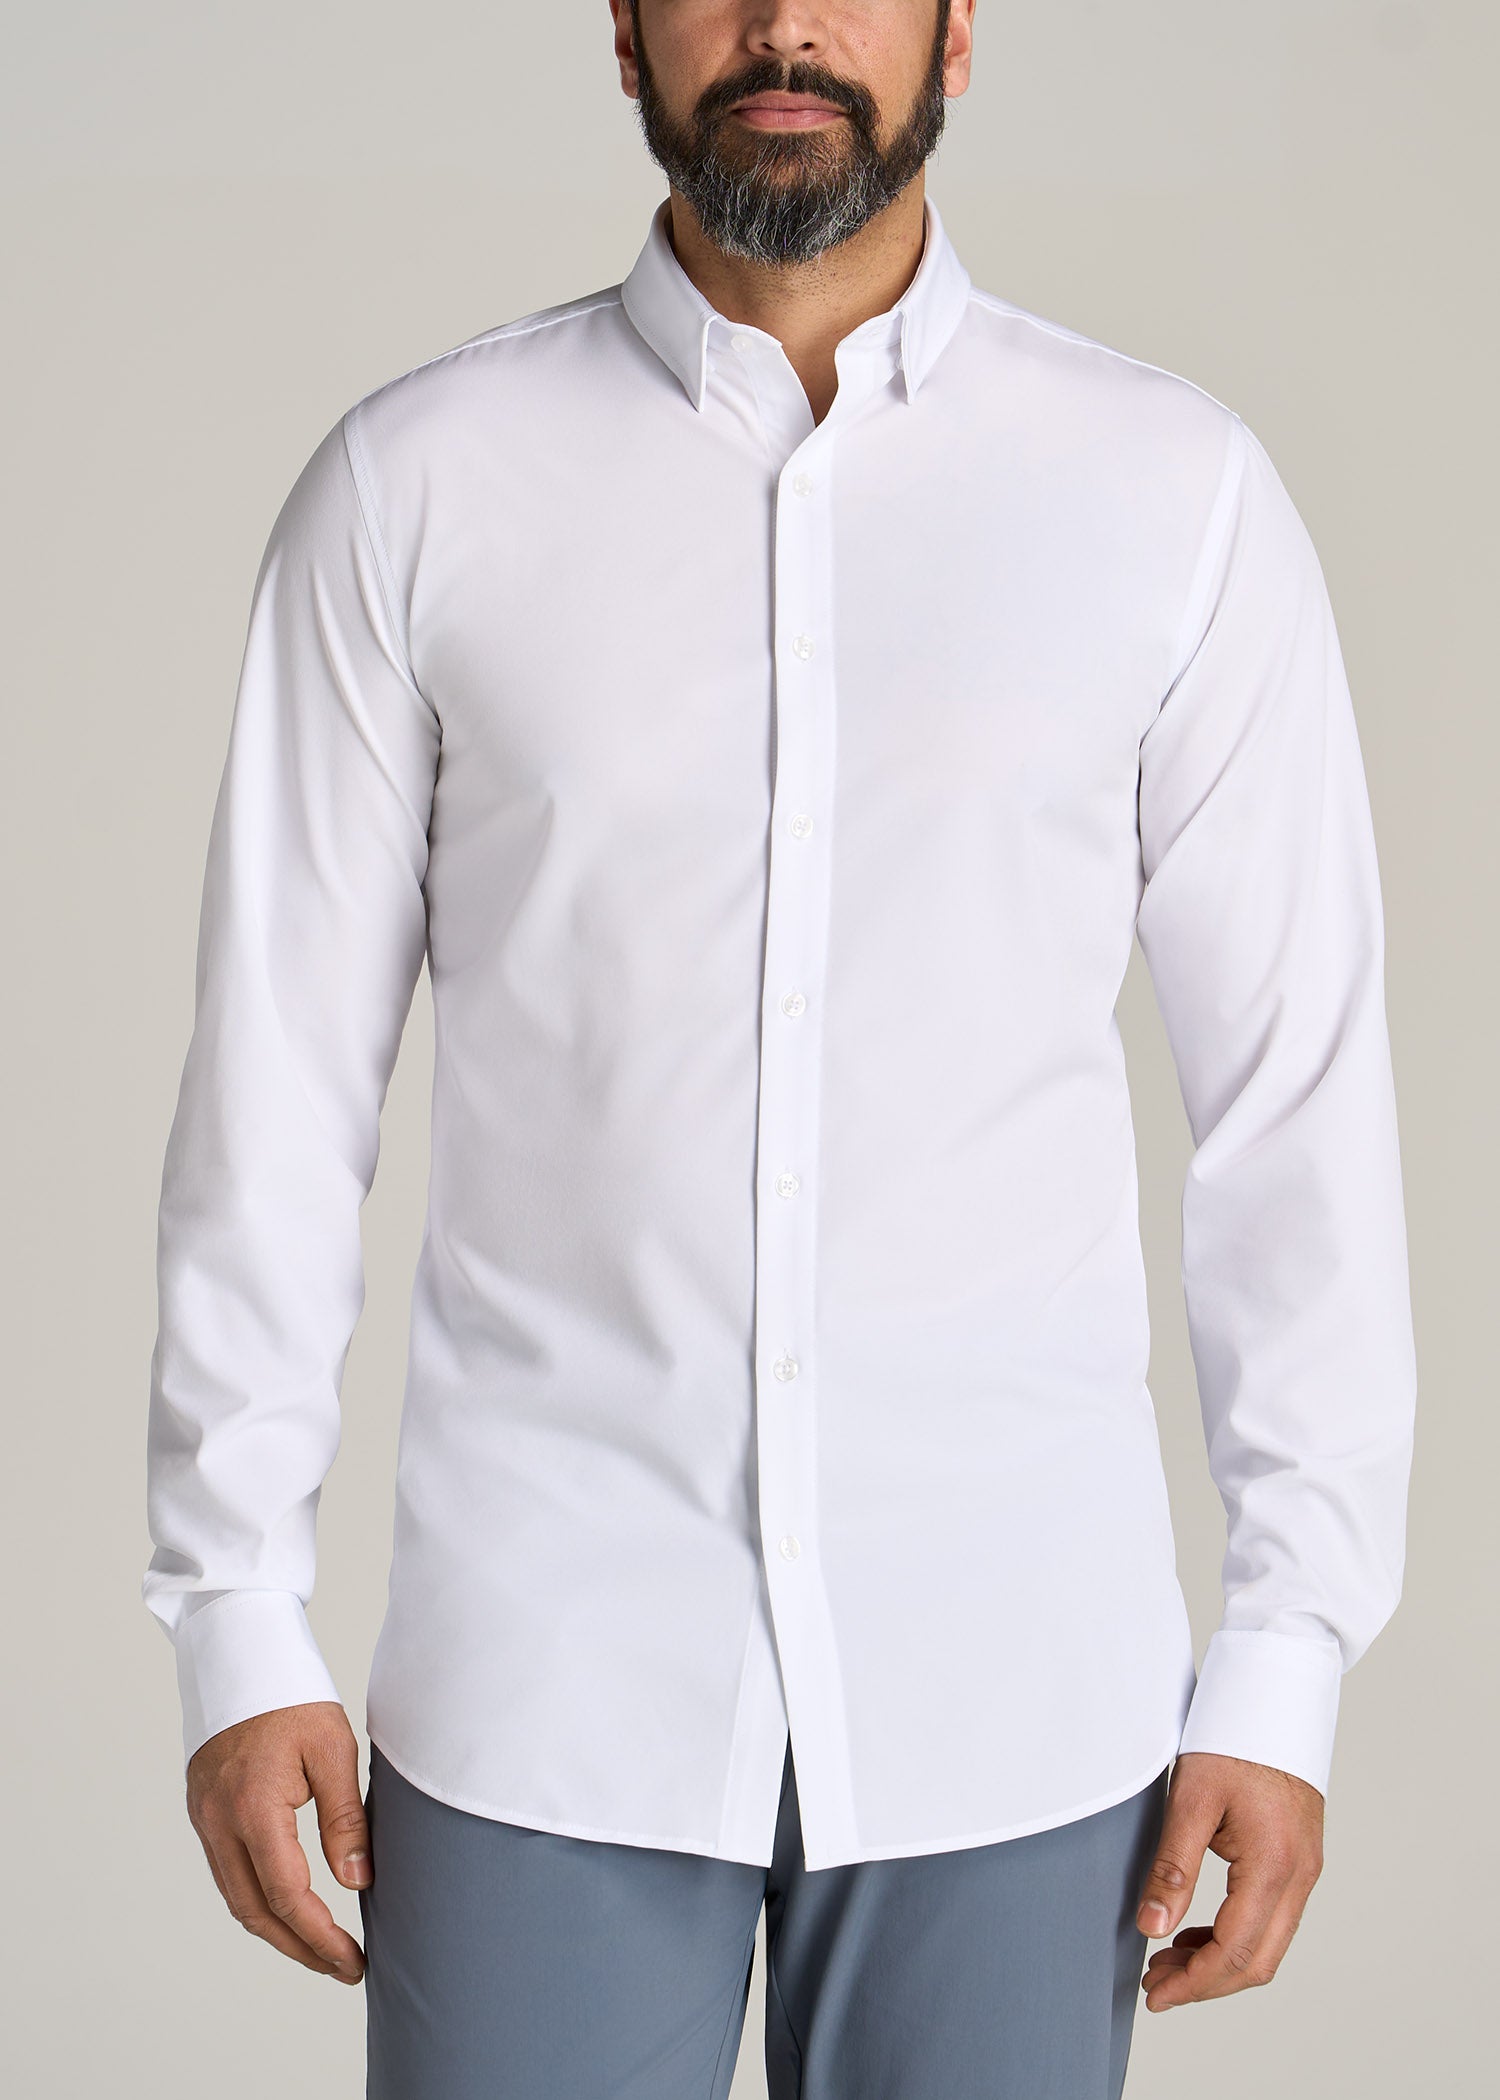 Traveler Stretch Dress Shirt for Tall Men in White M / Extra Tall / White